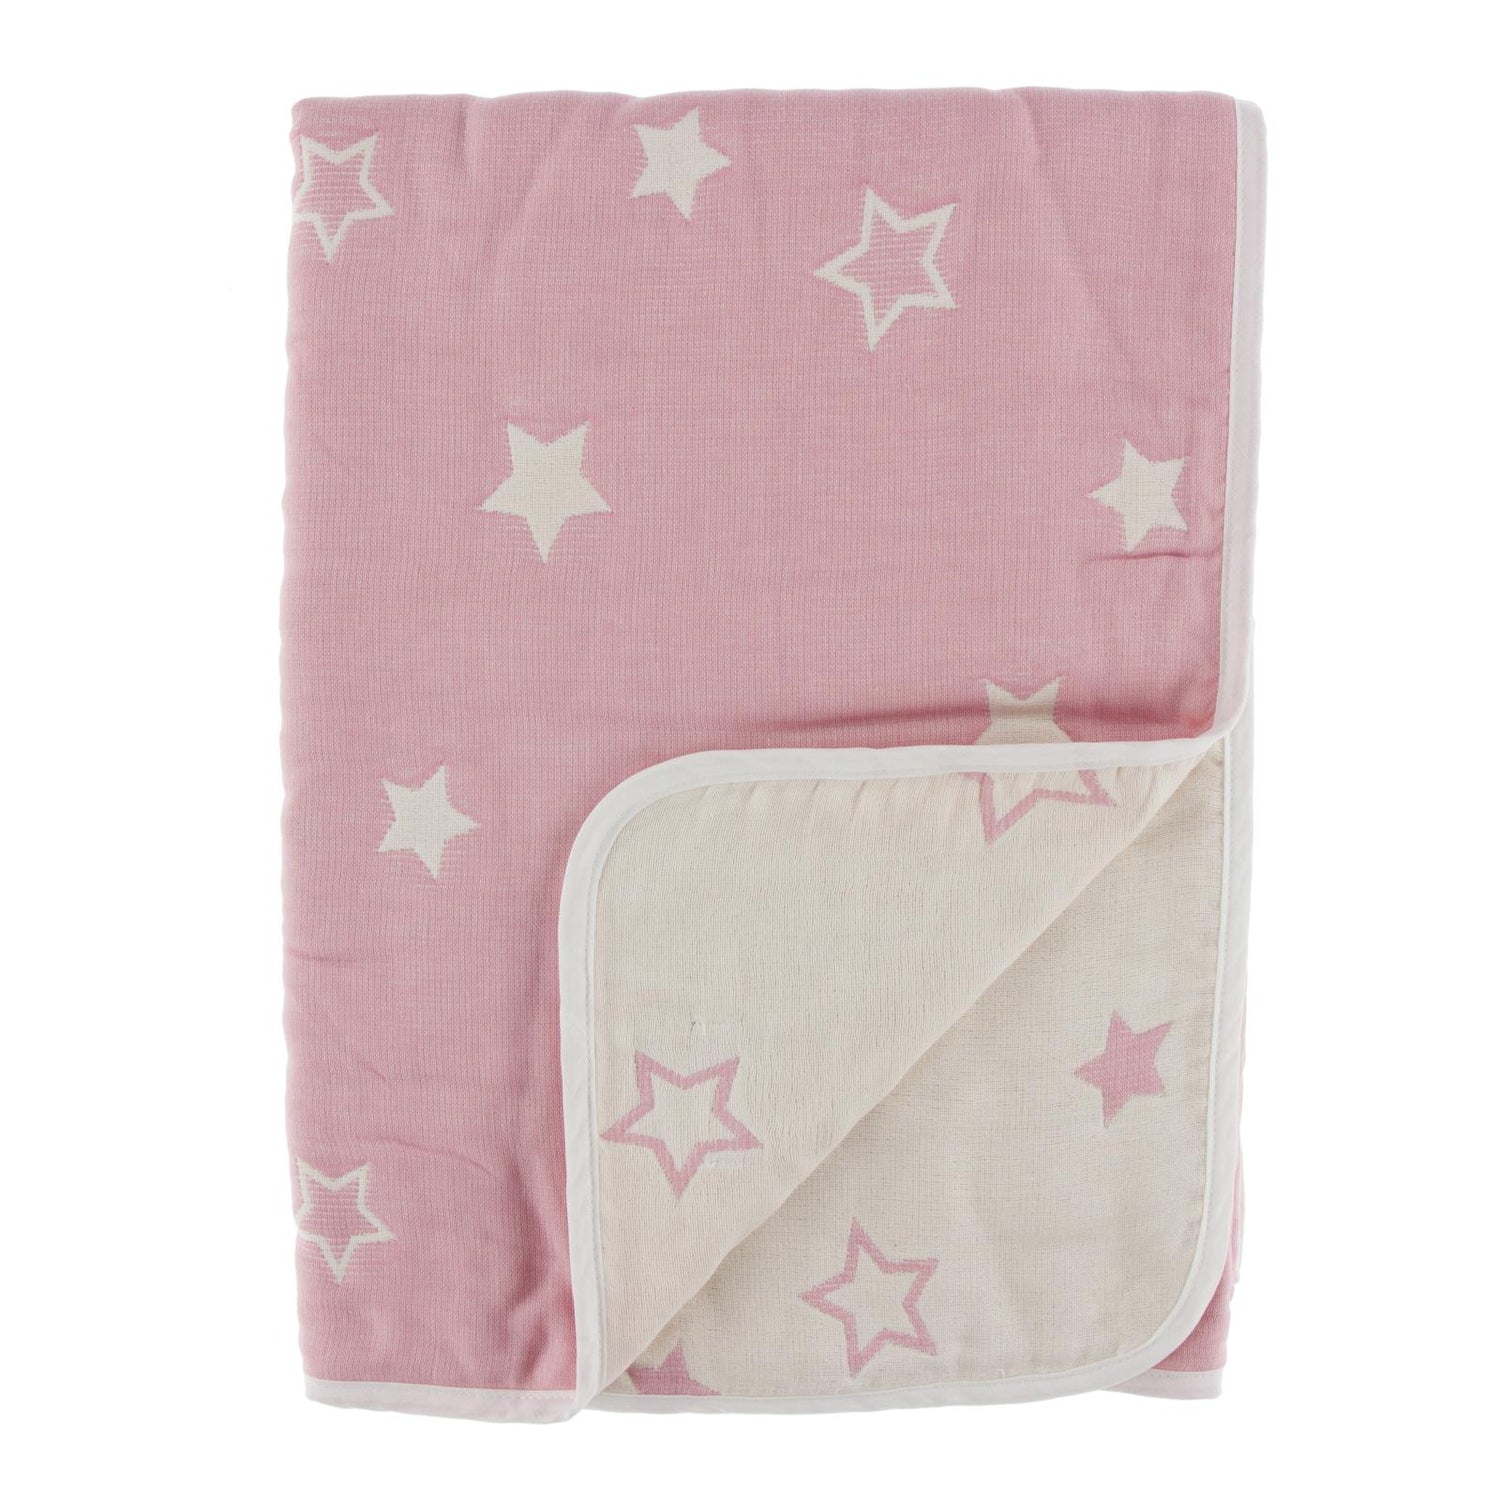 Jacquard Muslin Toddler/Kid Nap Blanket in Pink Star